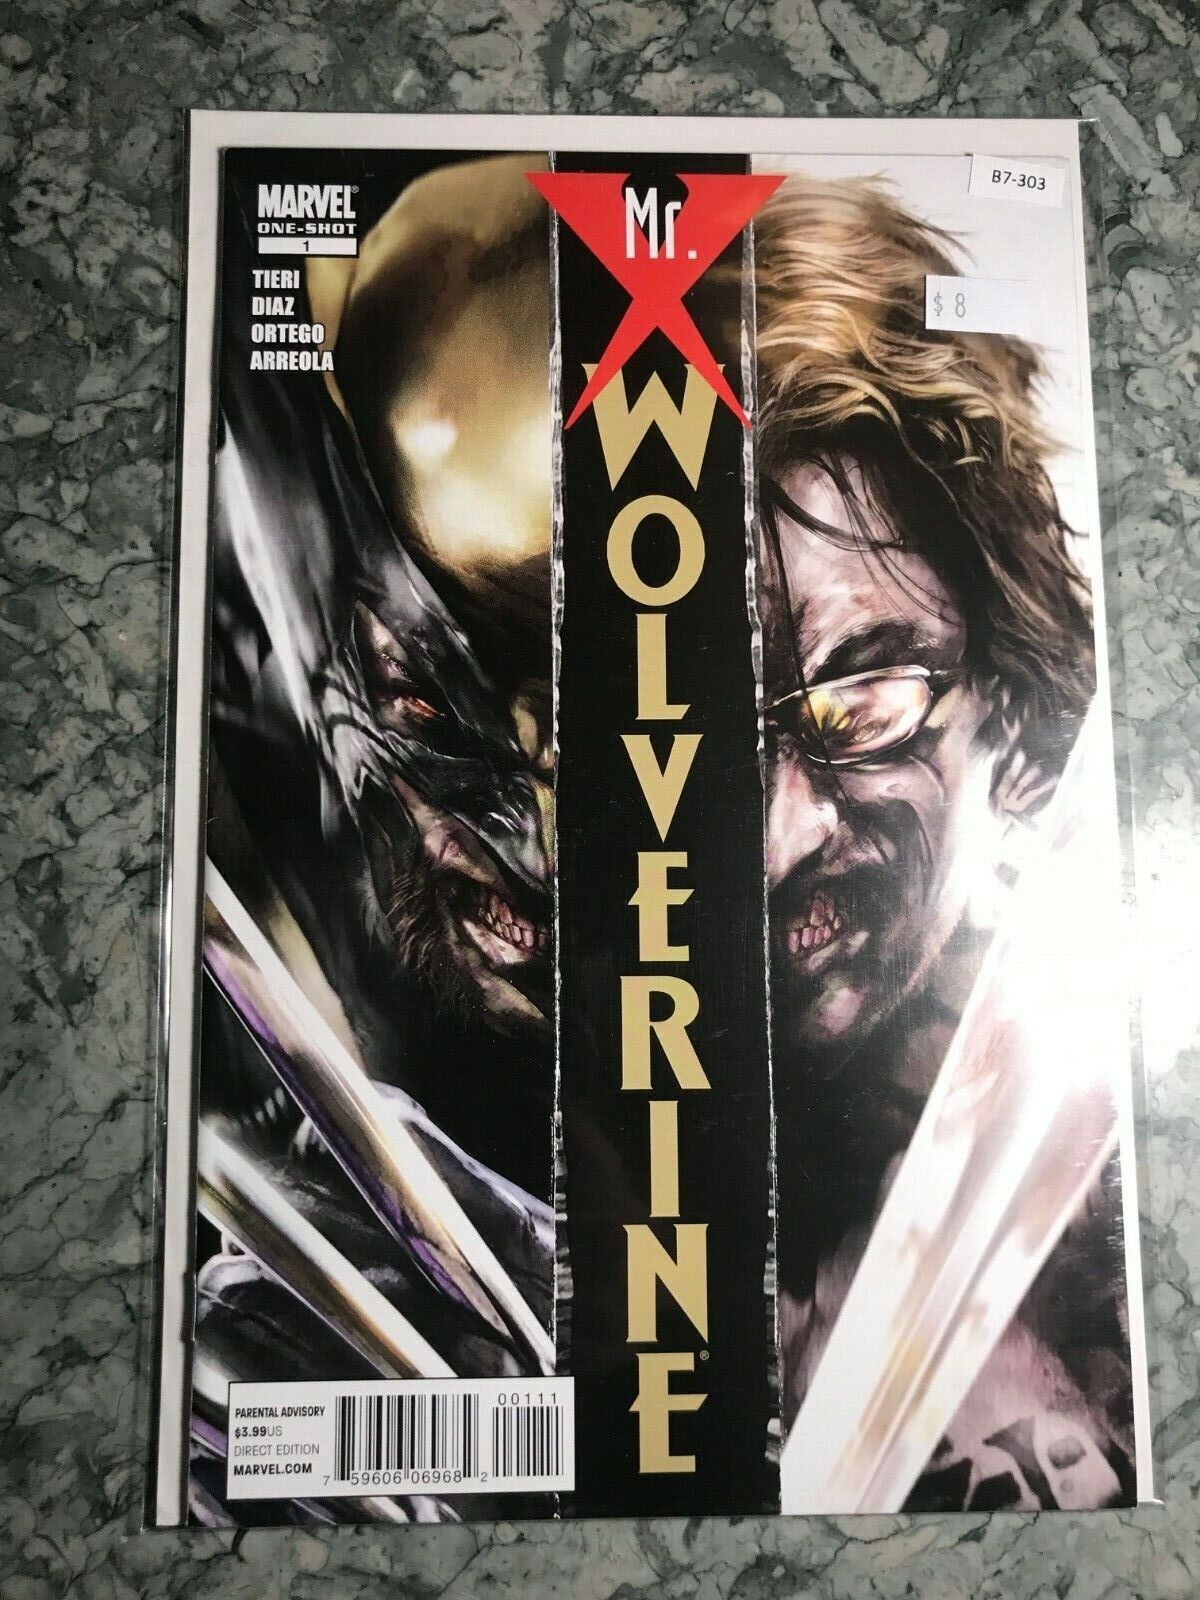 Wolverine: Mr. X #1 2010 One-Shot High Grade 9.4 Marvel Comic Book B7-303